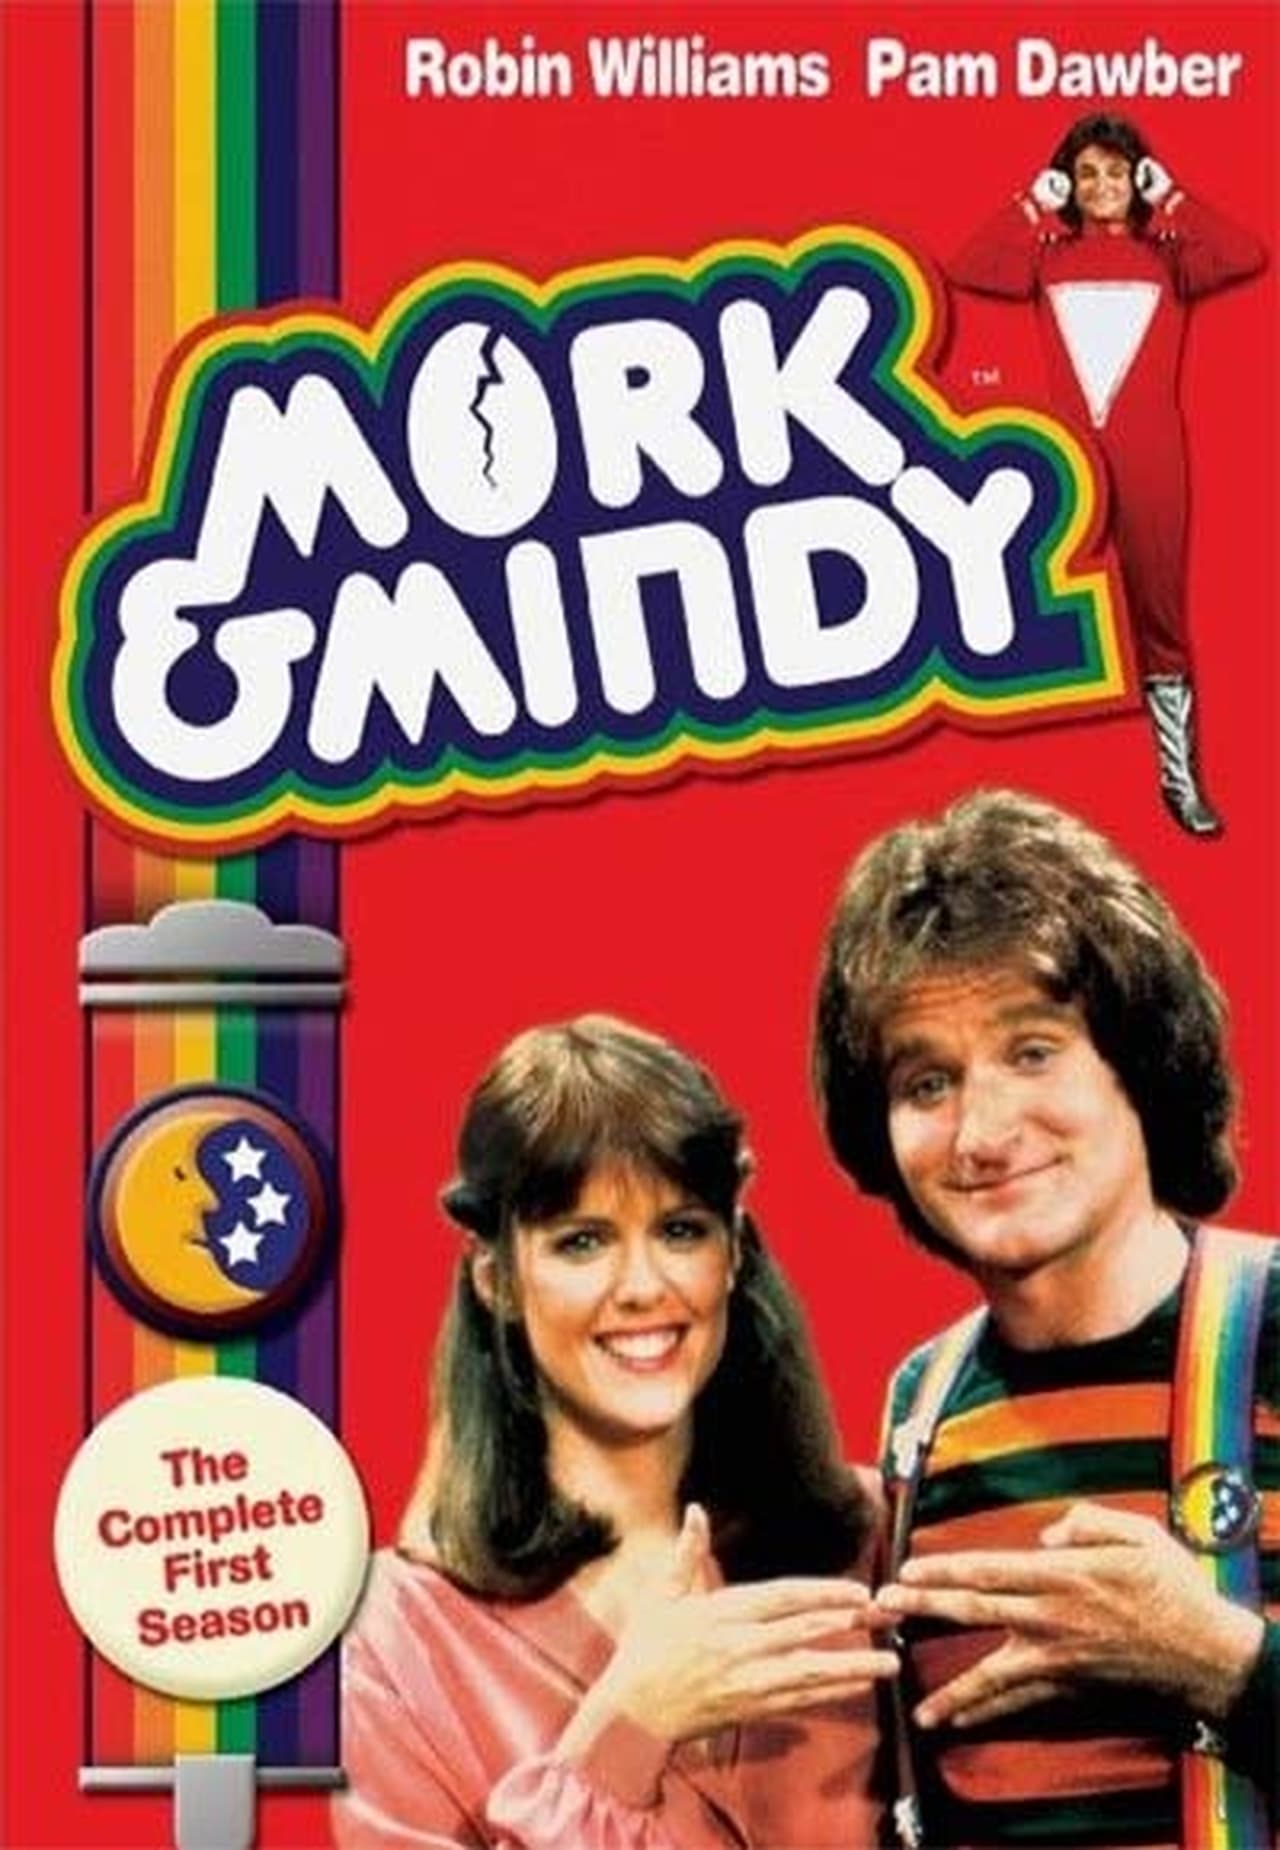 Mork & Mindy Season 1